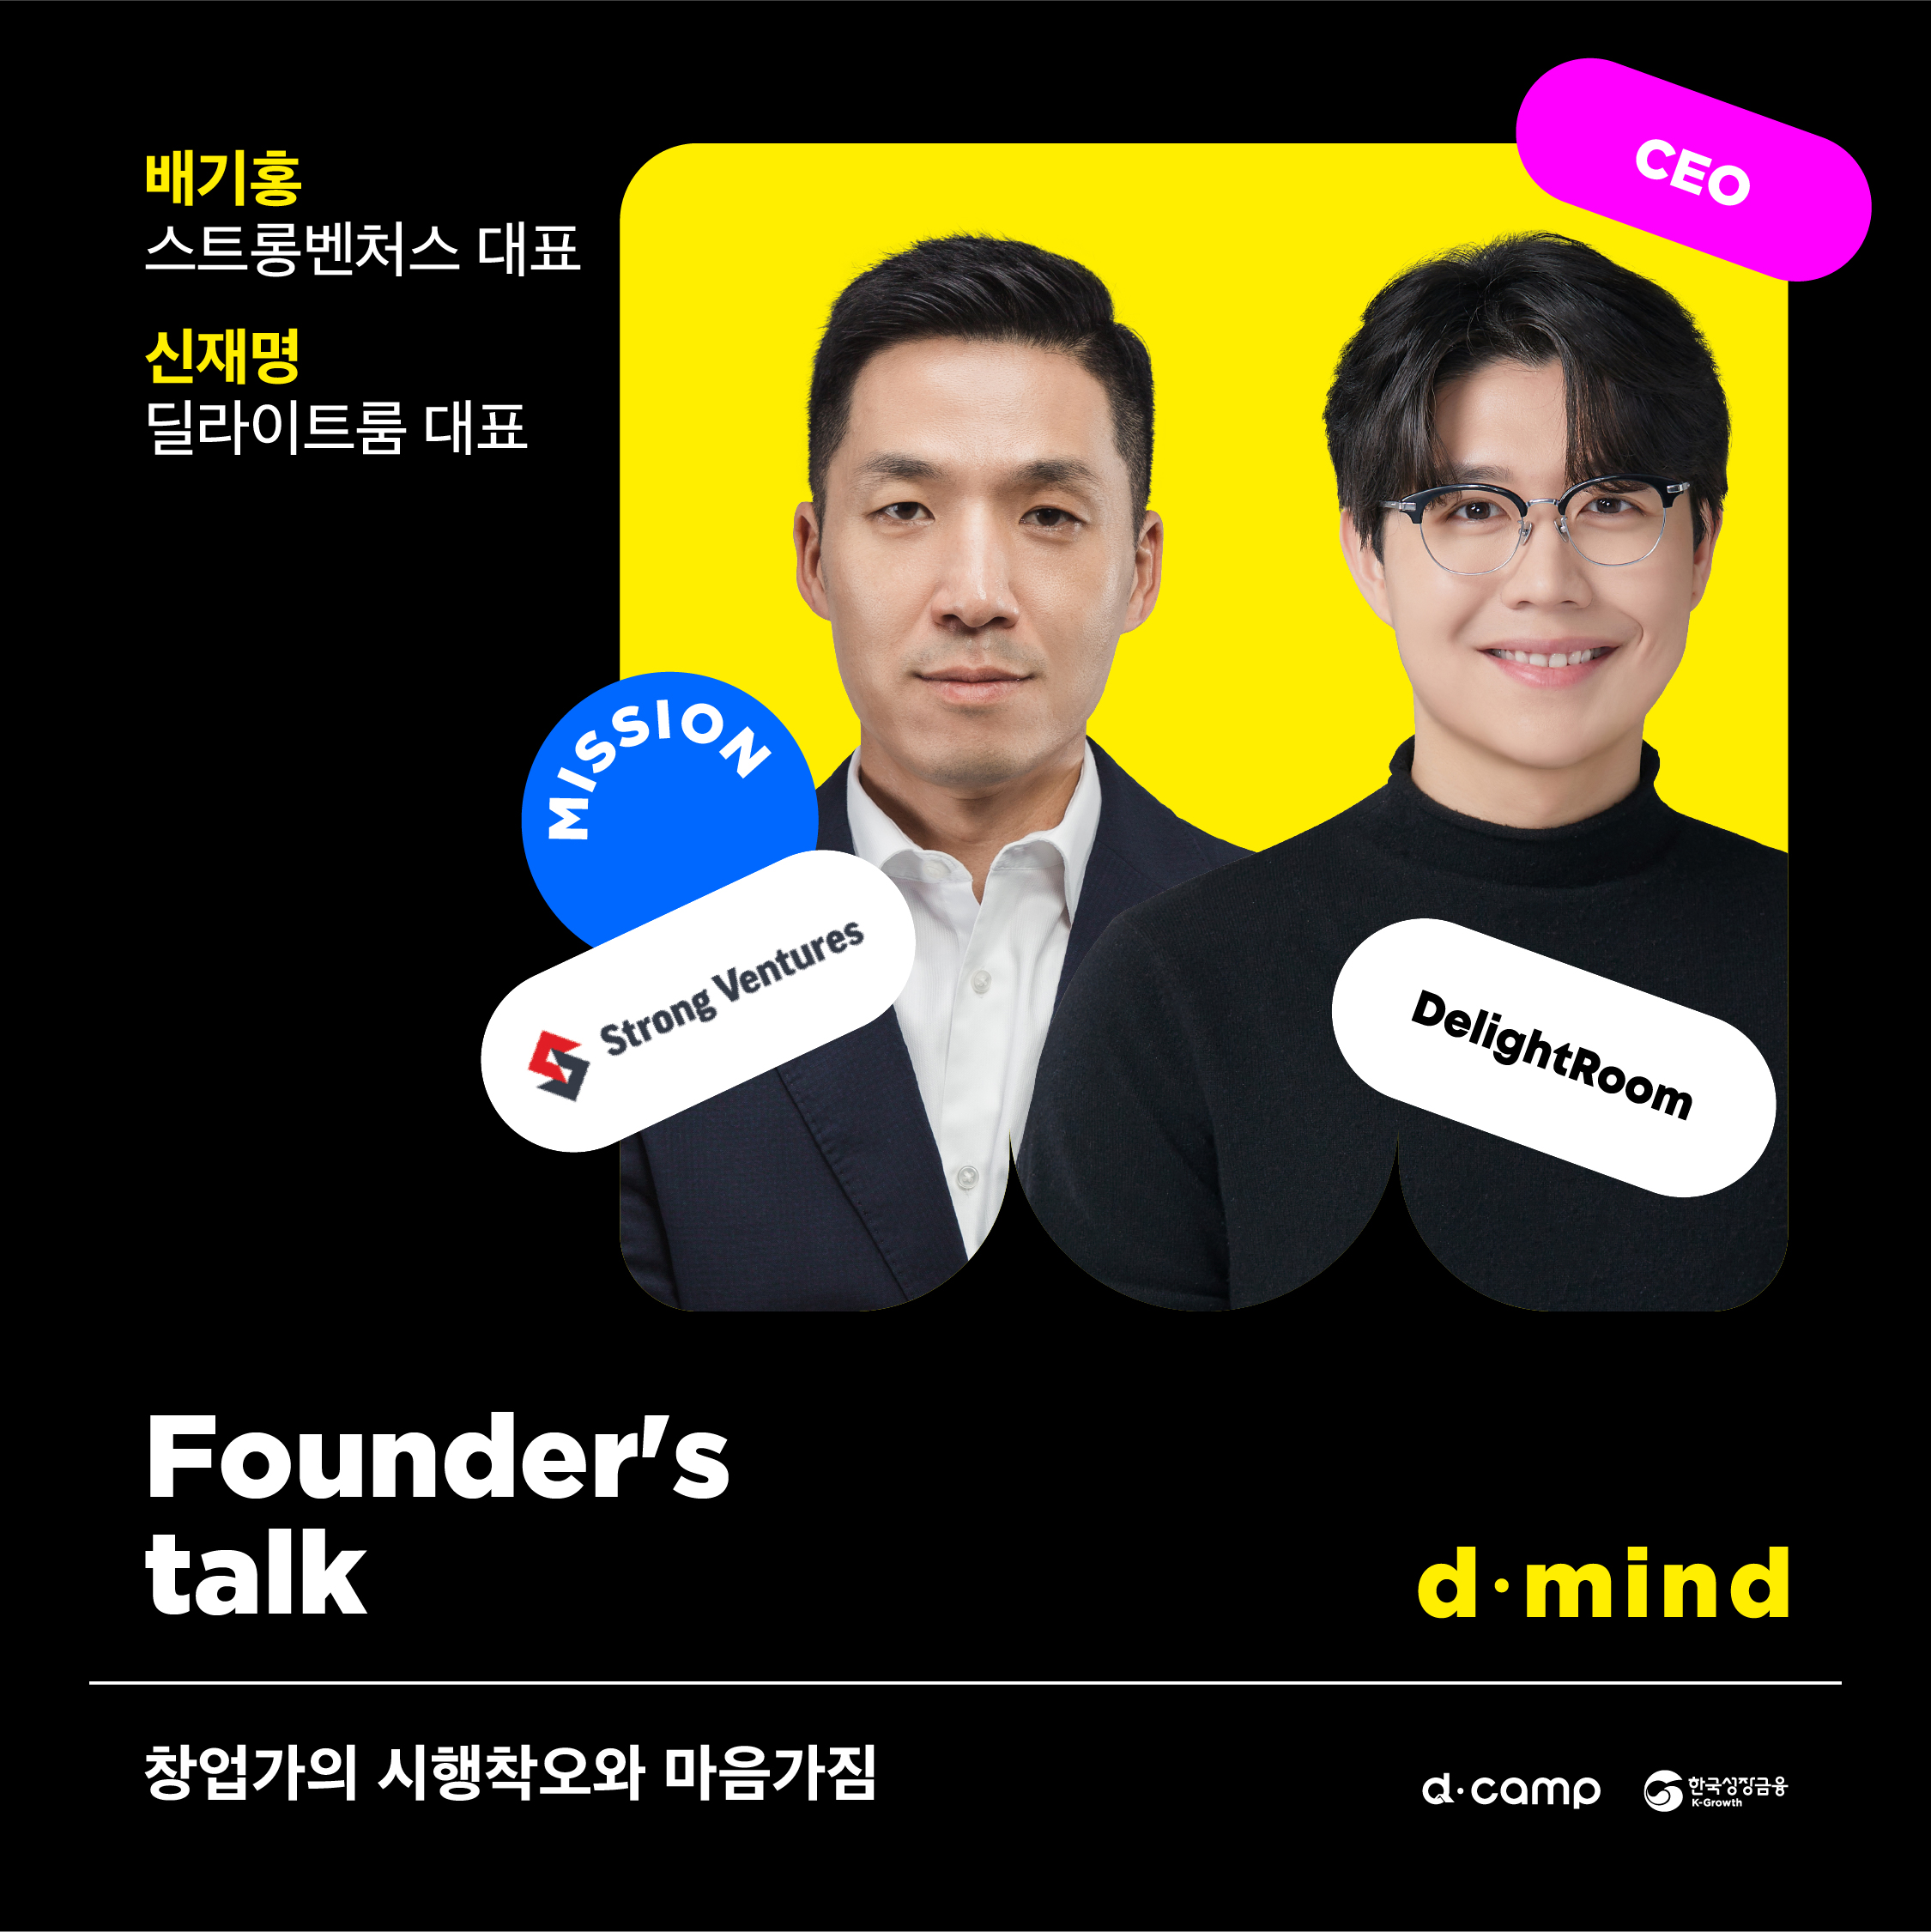 d·mind : Founder's talk 의 웹포스터